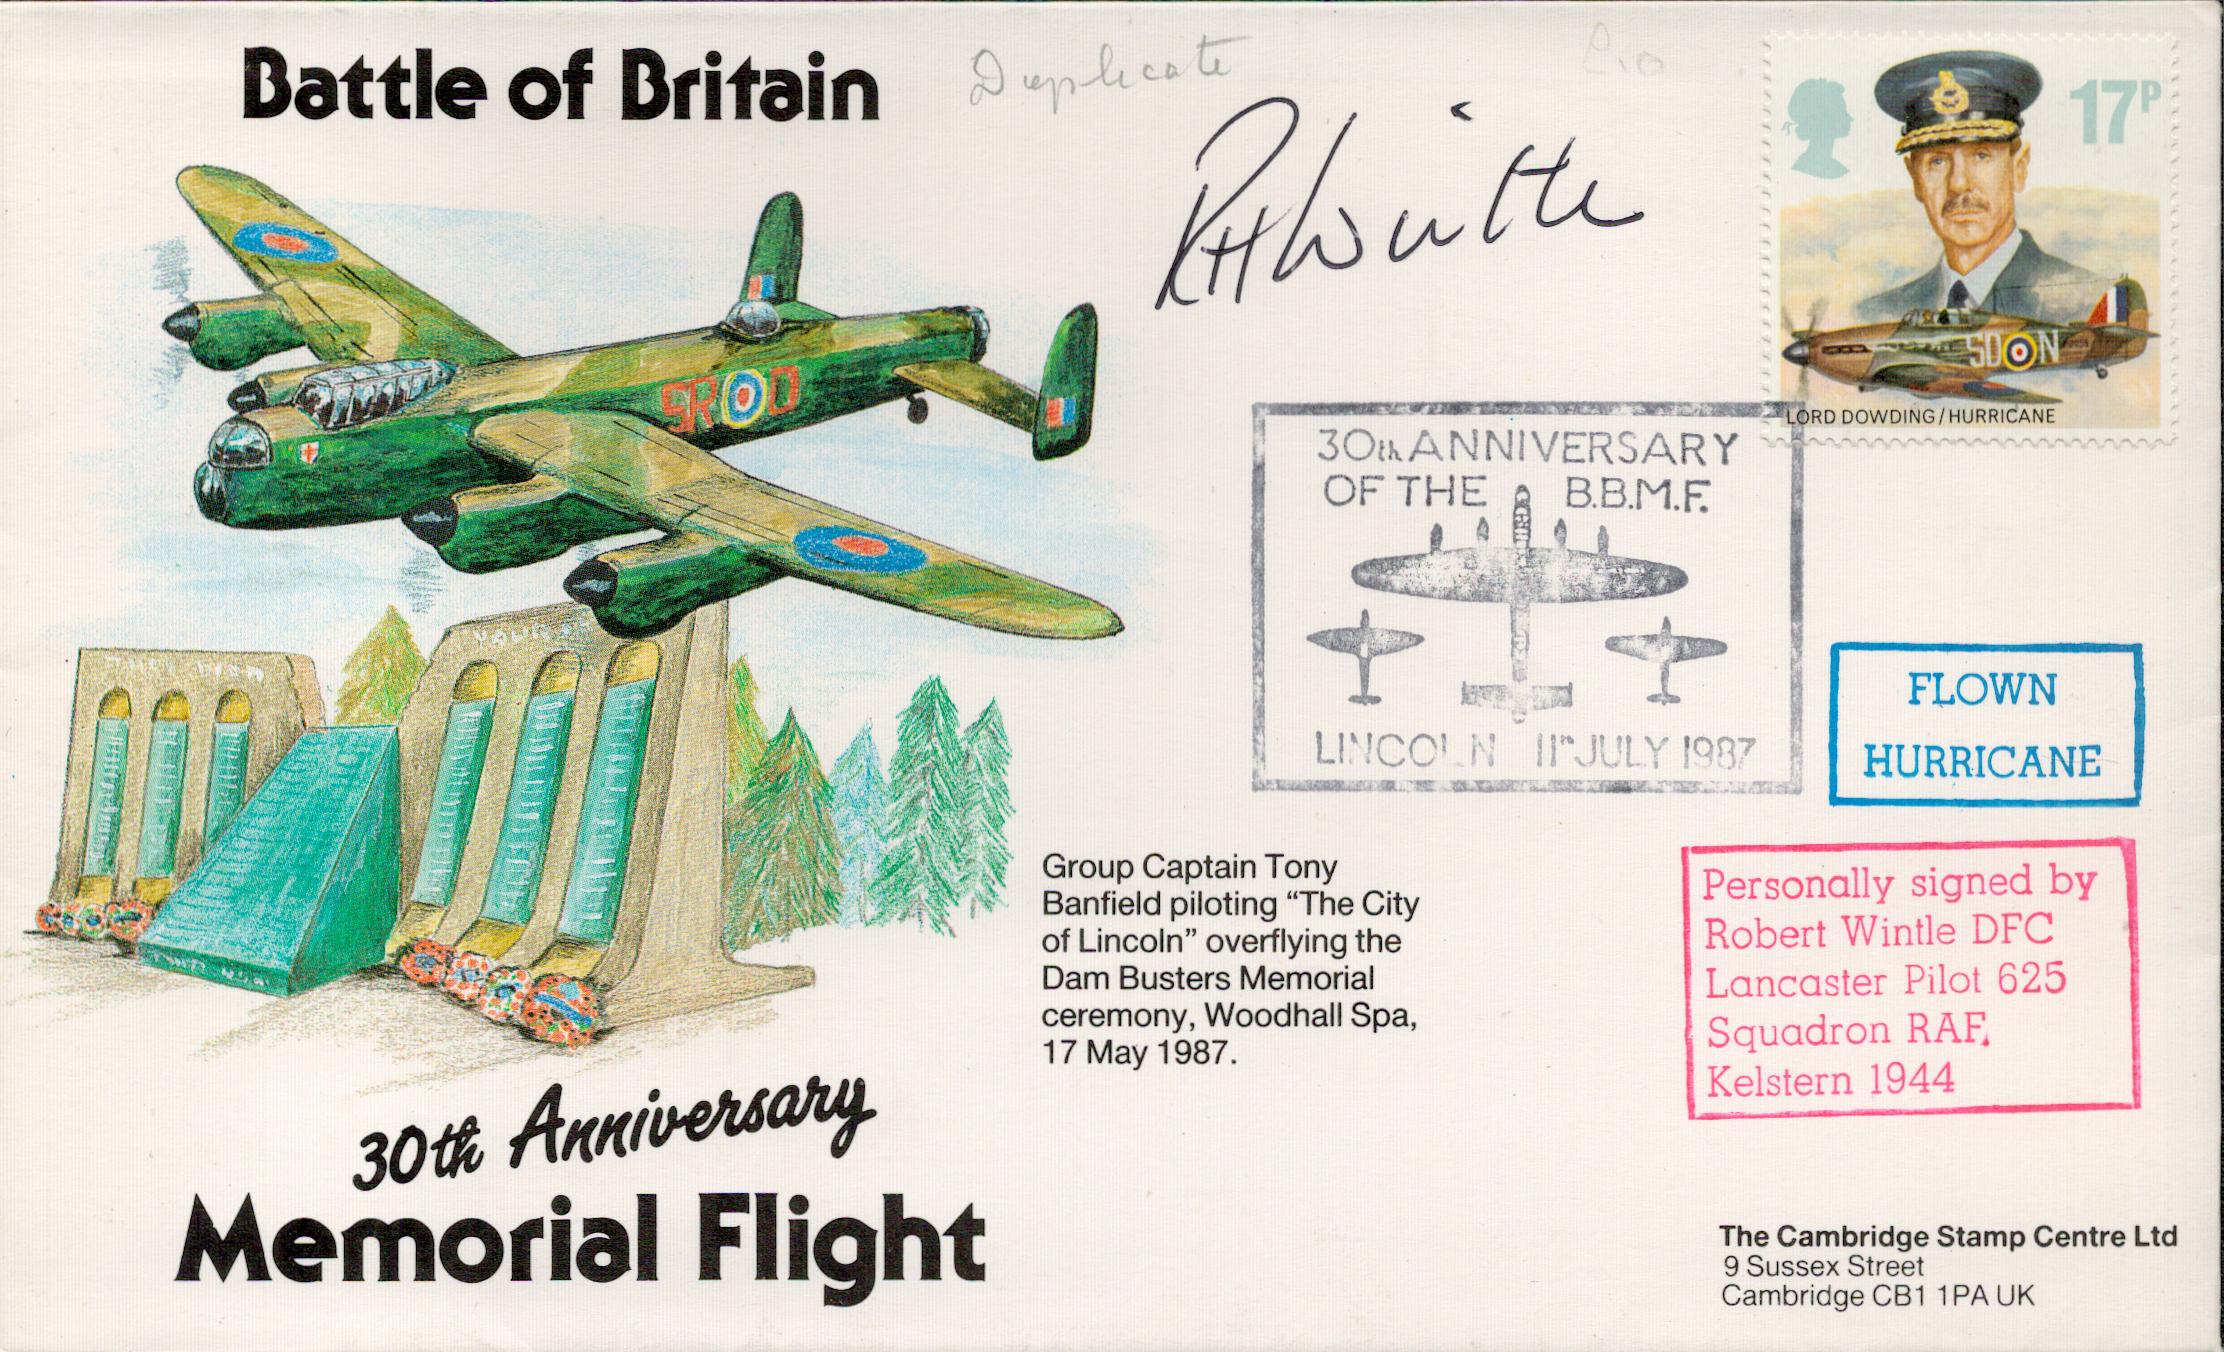 Robert Wintle DFC Lancaster Pilot RAF Signed Battle of Britain 30th Anniv Memorial Flight flown FDC.